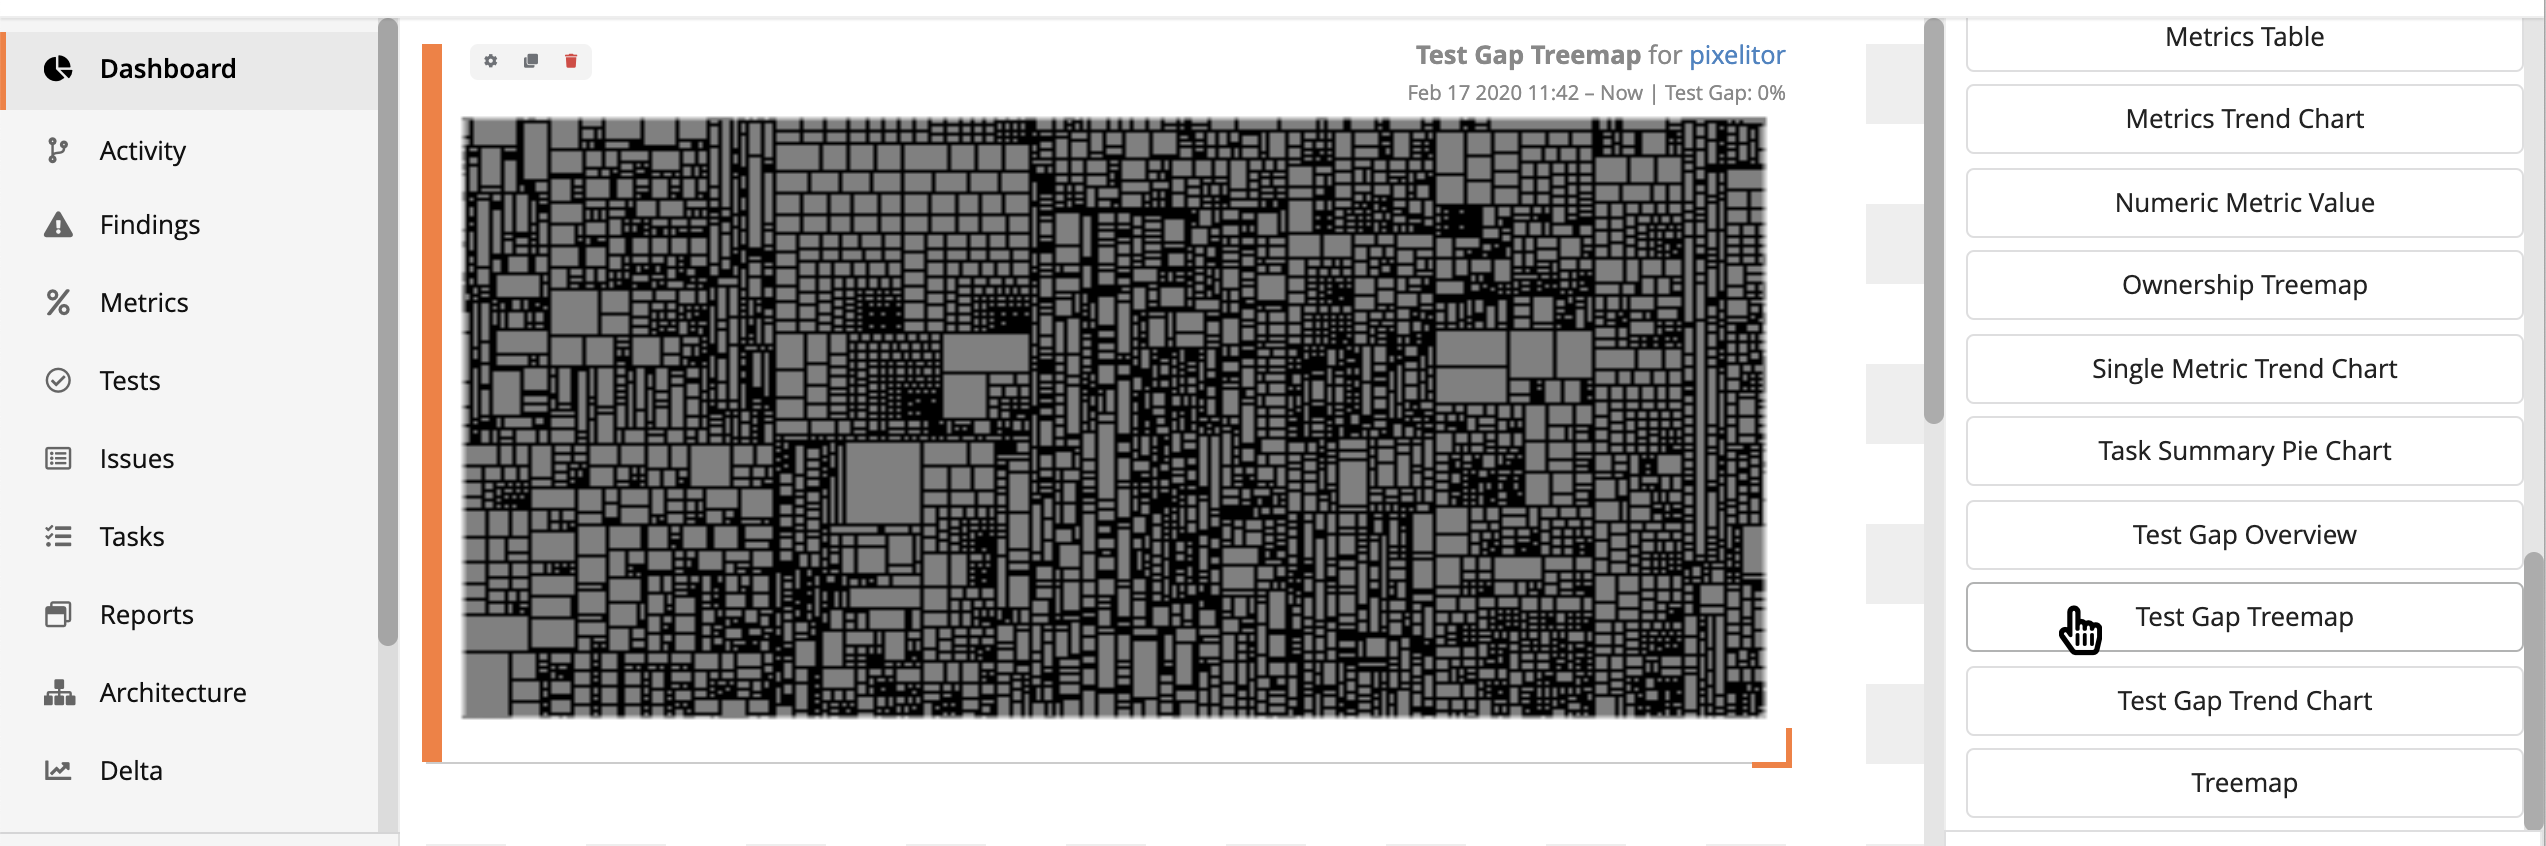 Adding a Dashboard with a Test Gap Treemap